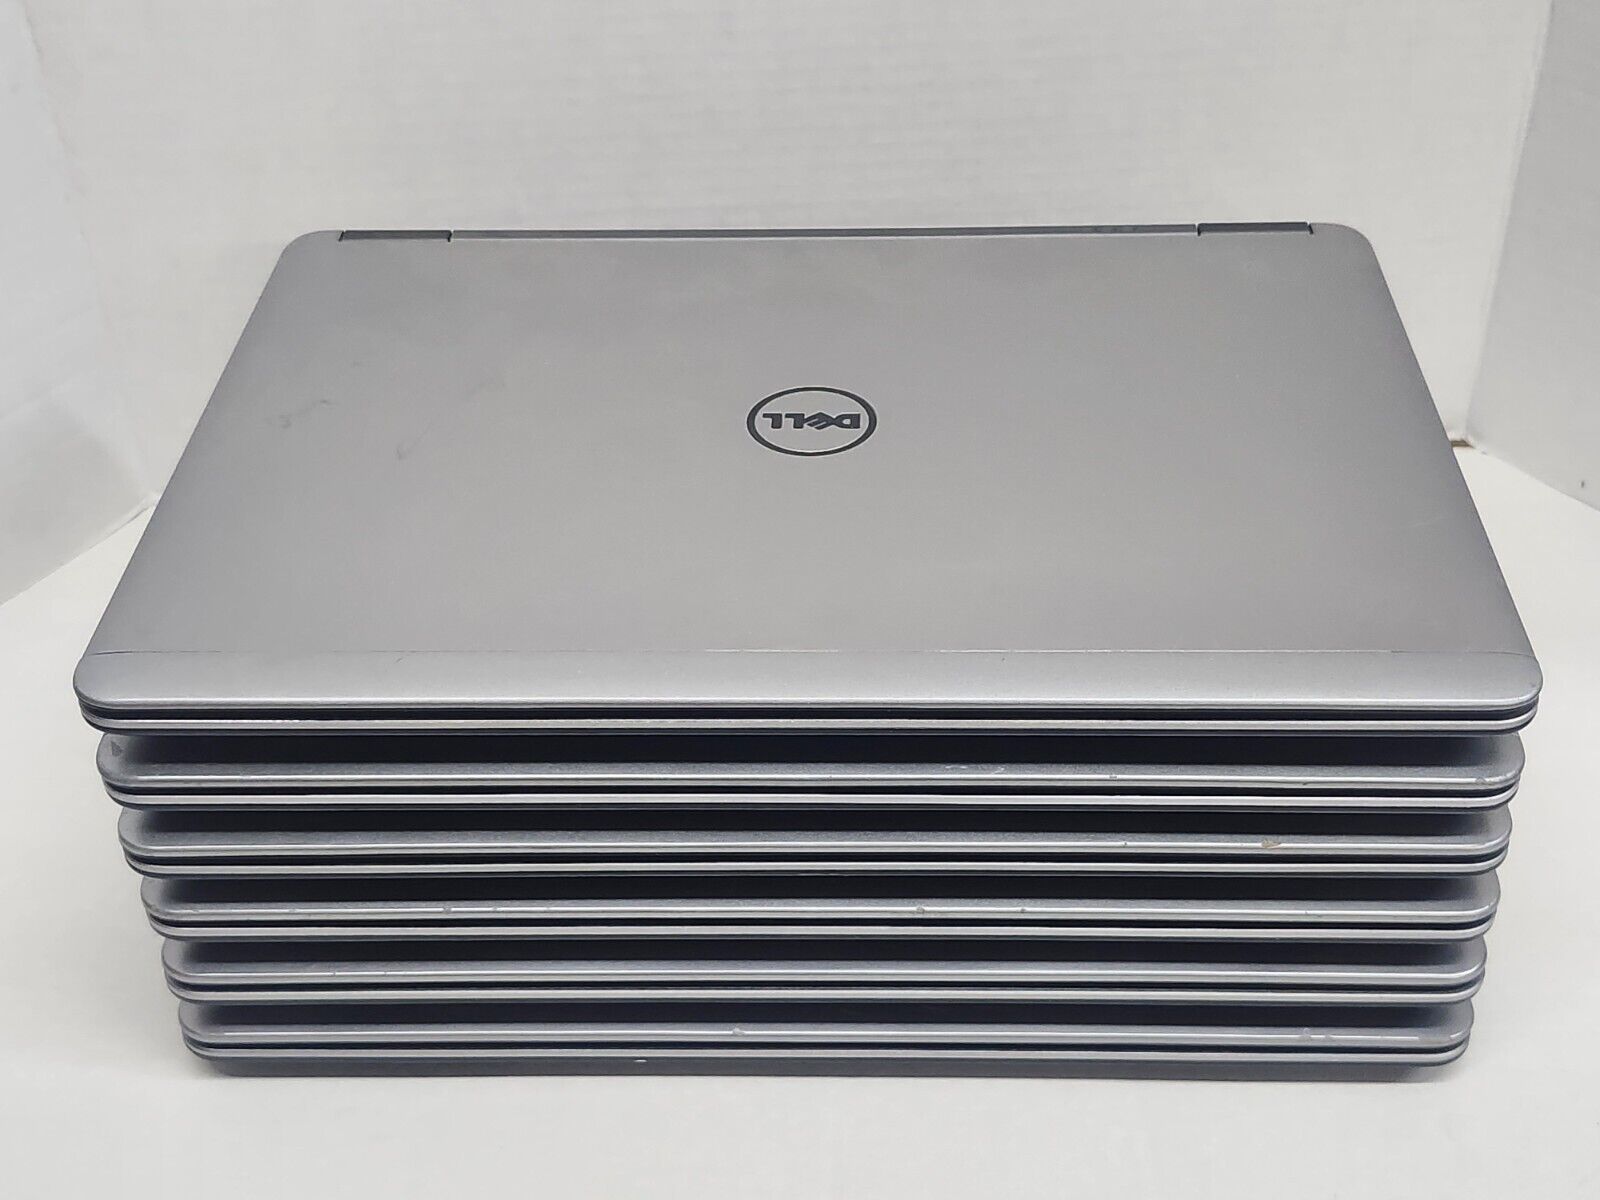 Lot of 6 Dell Latitude E7440 Laptop i5 i7 Mixed Specs w/SSD and AC